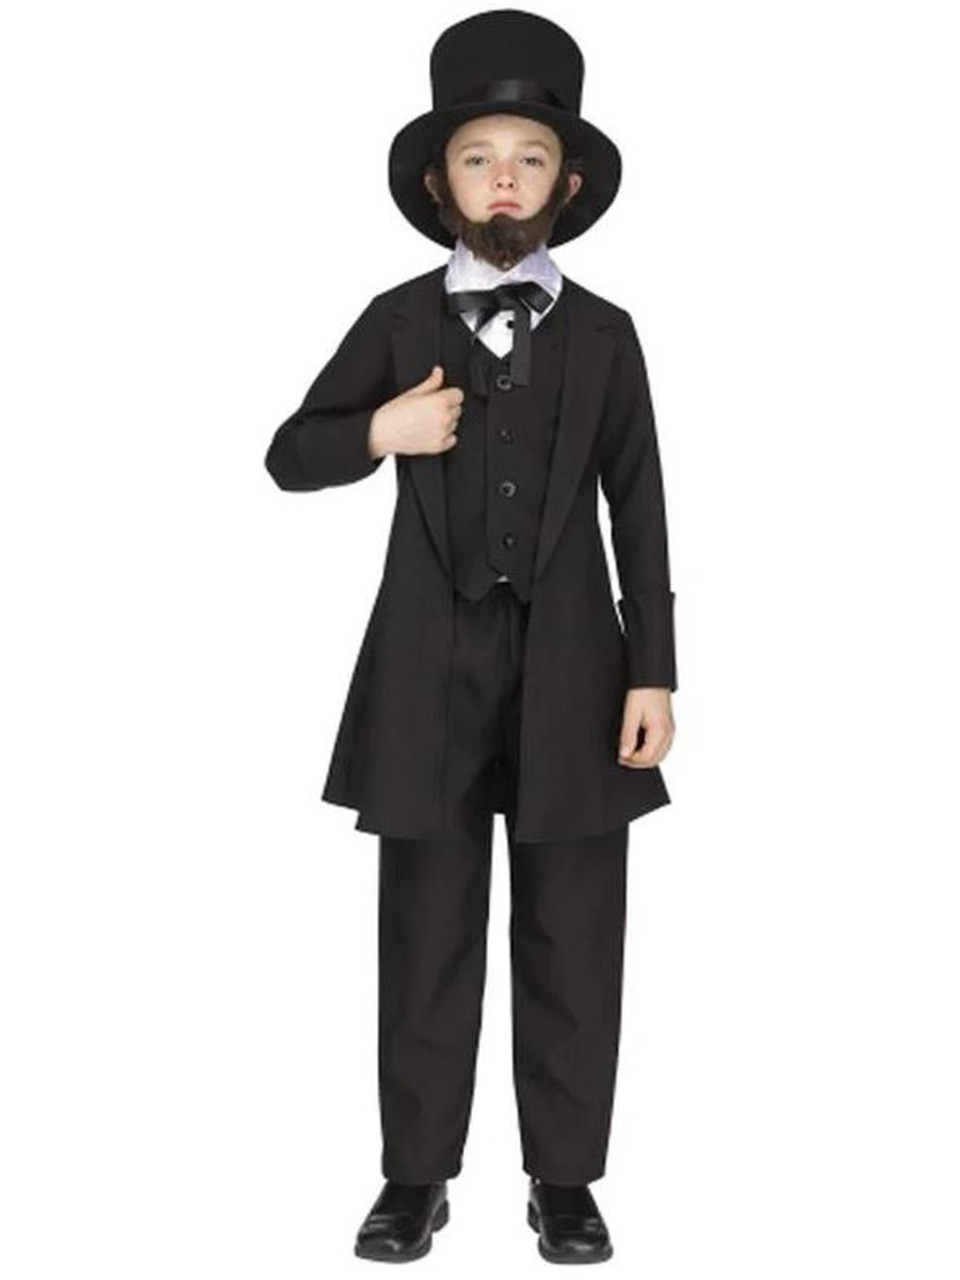 American President Abraham Lincoln Boy's Costume